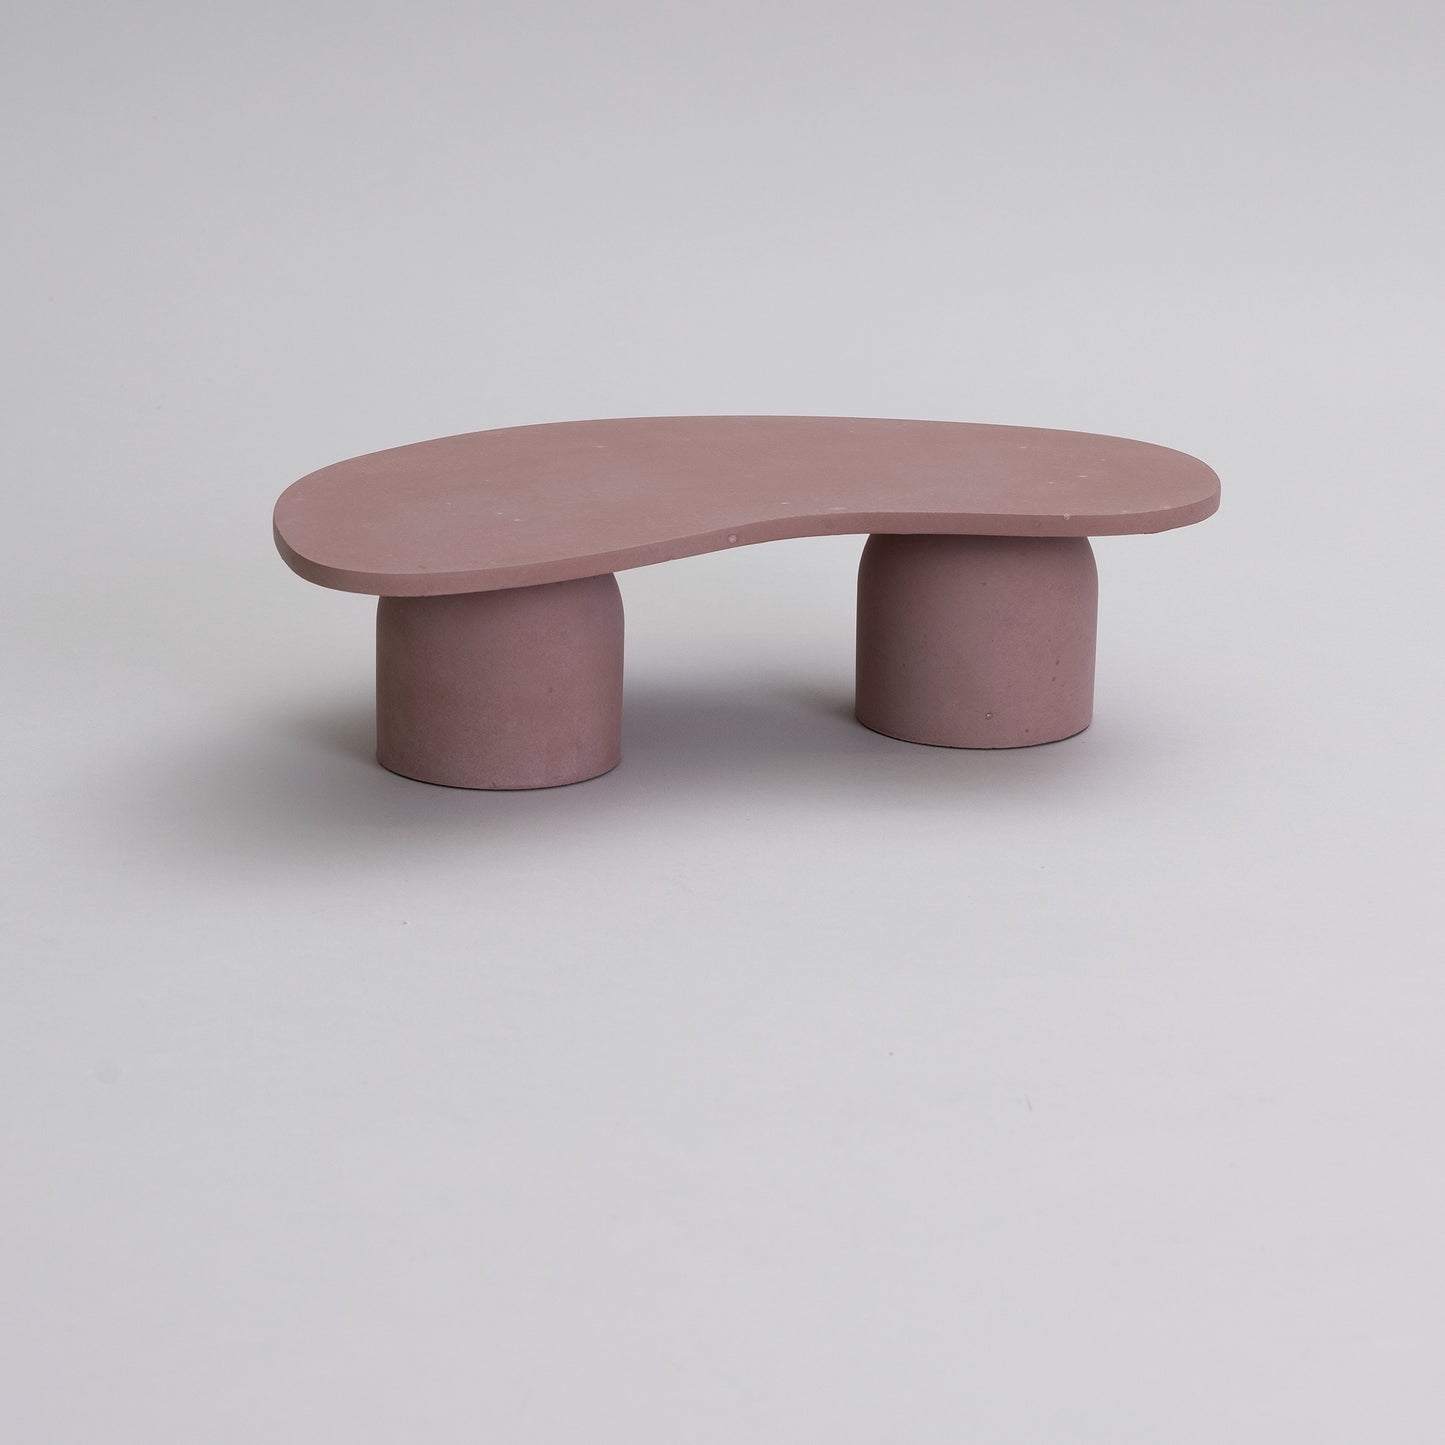 Old Rose concrete asymmetric table / Guer